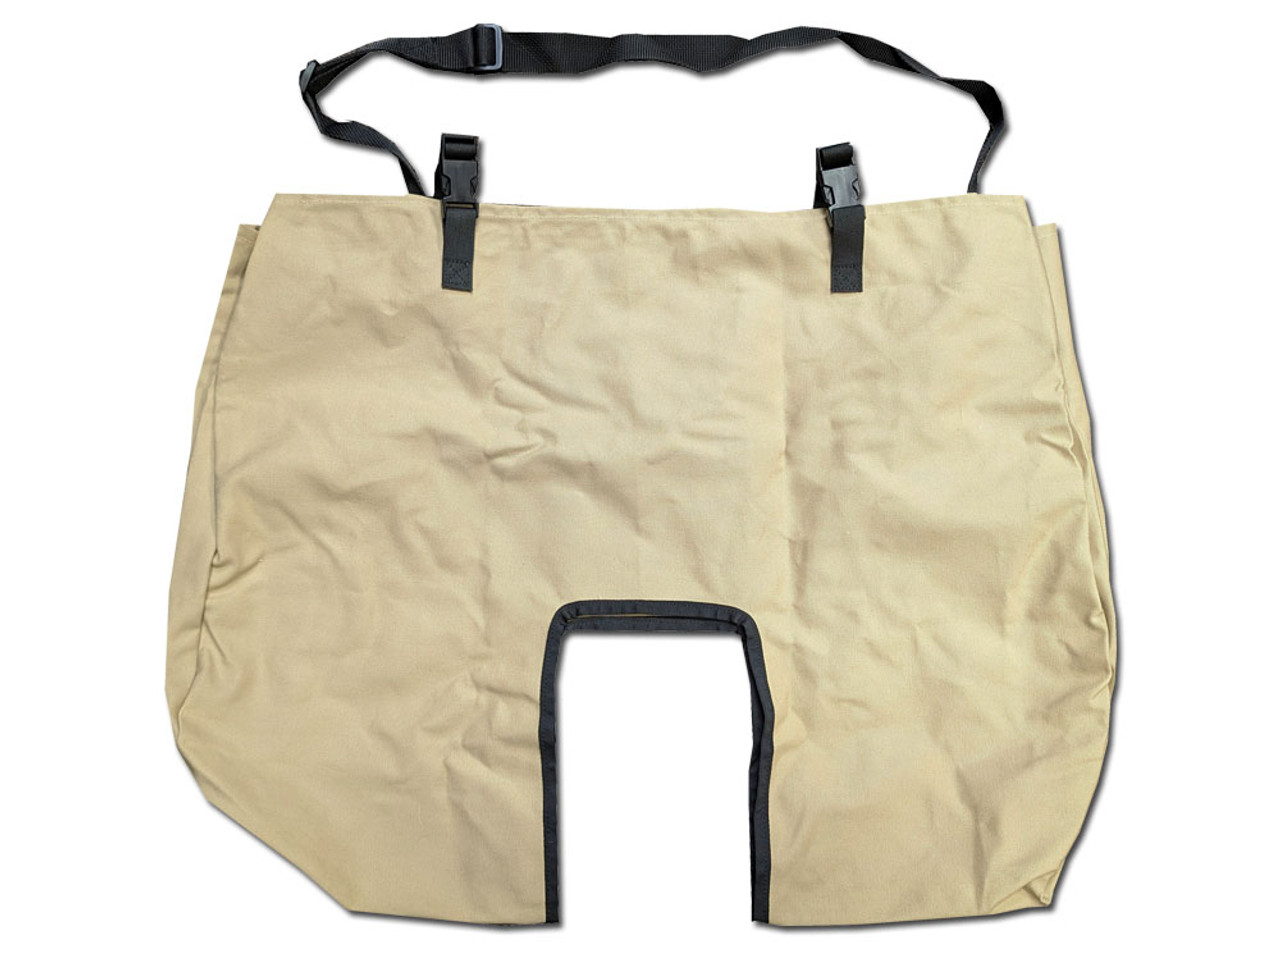 STANDARD Goose Decoy Bag with Open Bottom - Big Al's Decoys